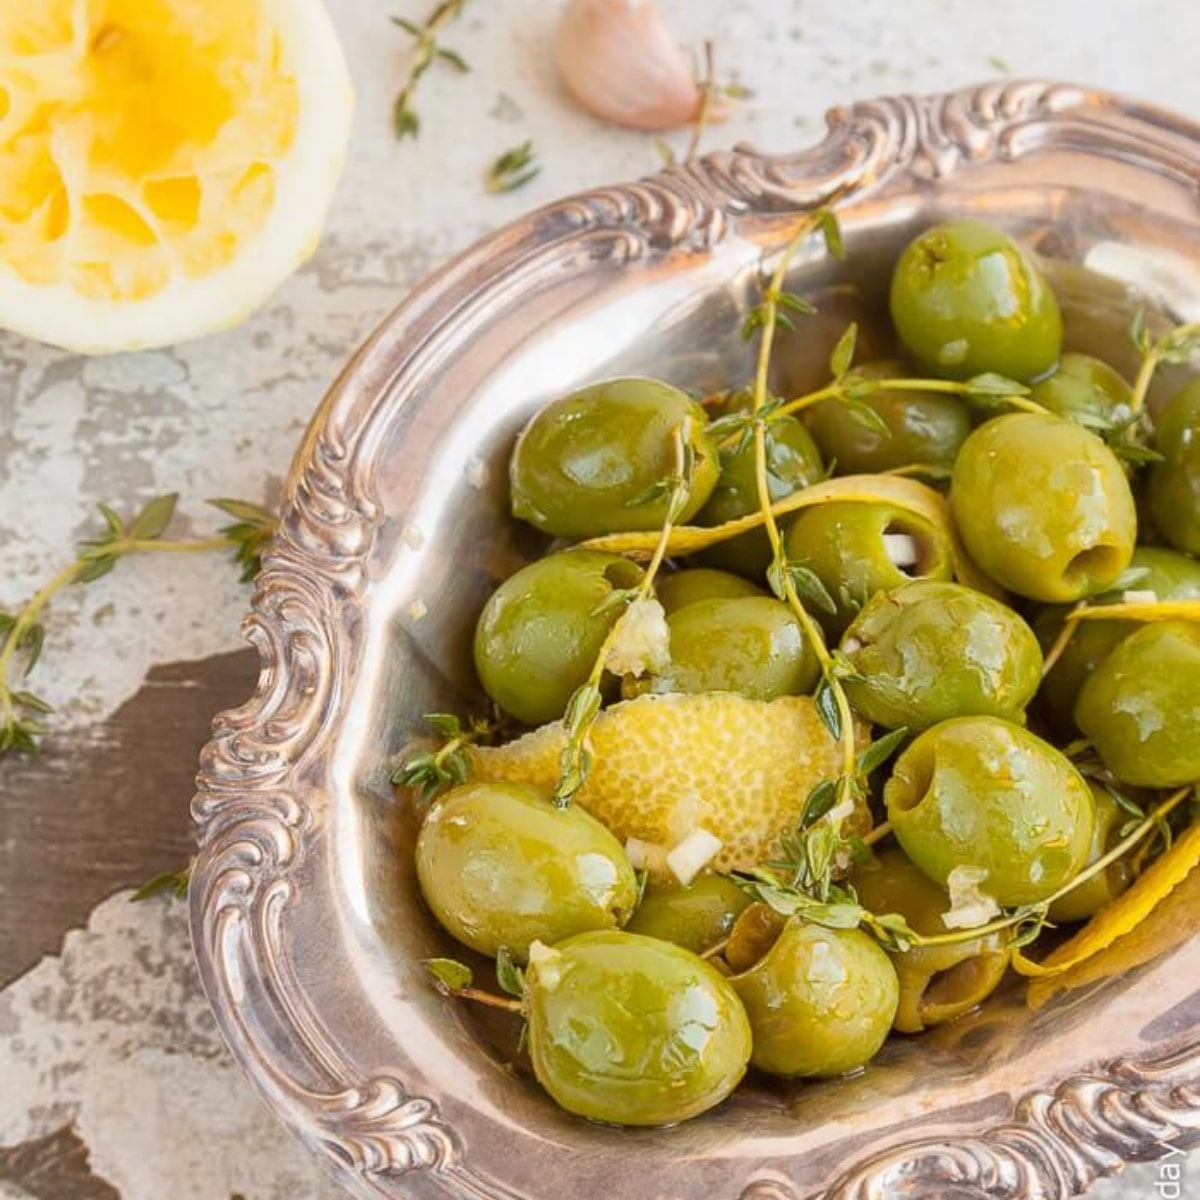 Lemon, Thyme, and Garlic Marinated Olives | Delicious Everyday